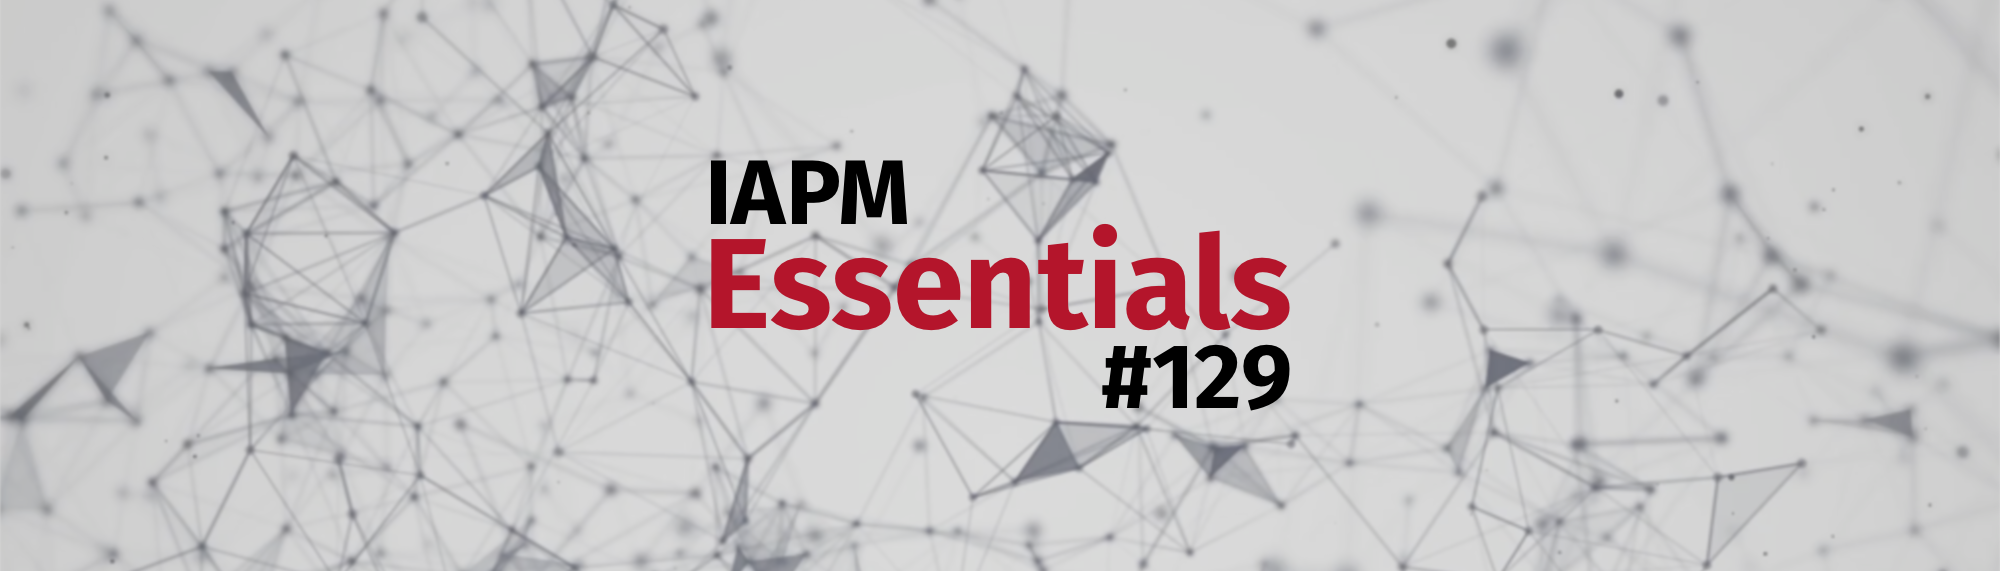 IAPM Essentials #129 - PM Neuigkeiten | IAPM